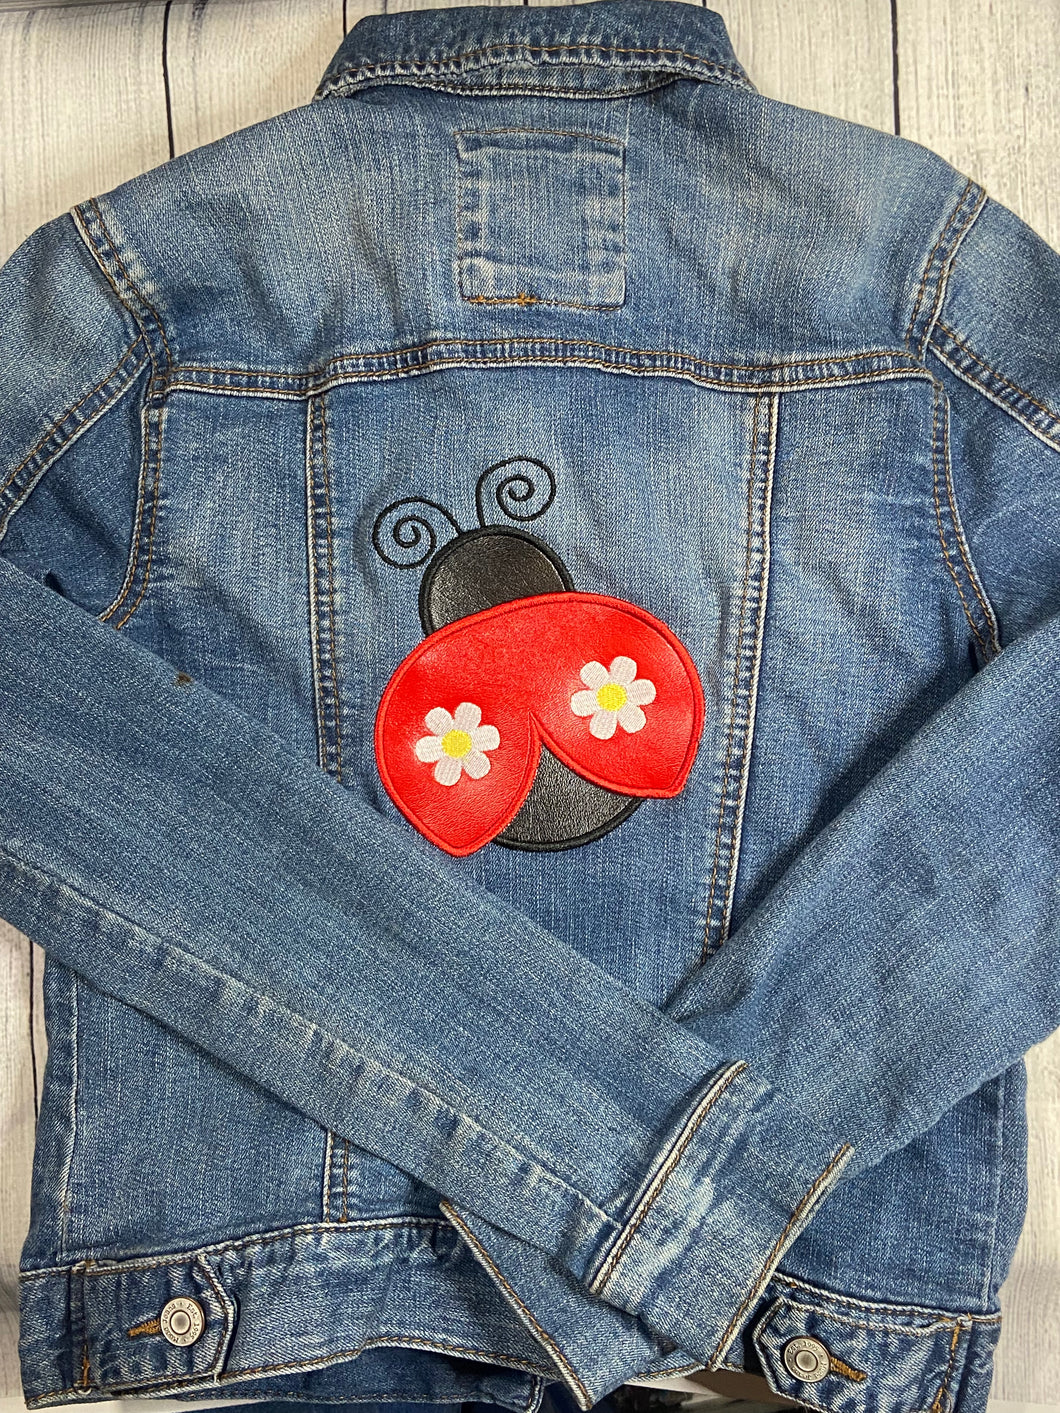 Ladybug Appliqué Up Cycled Denim Jacket (Ladies small)